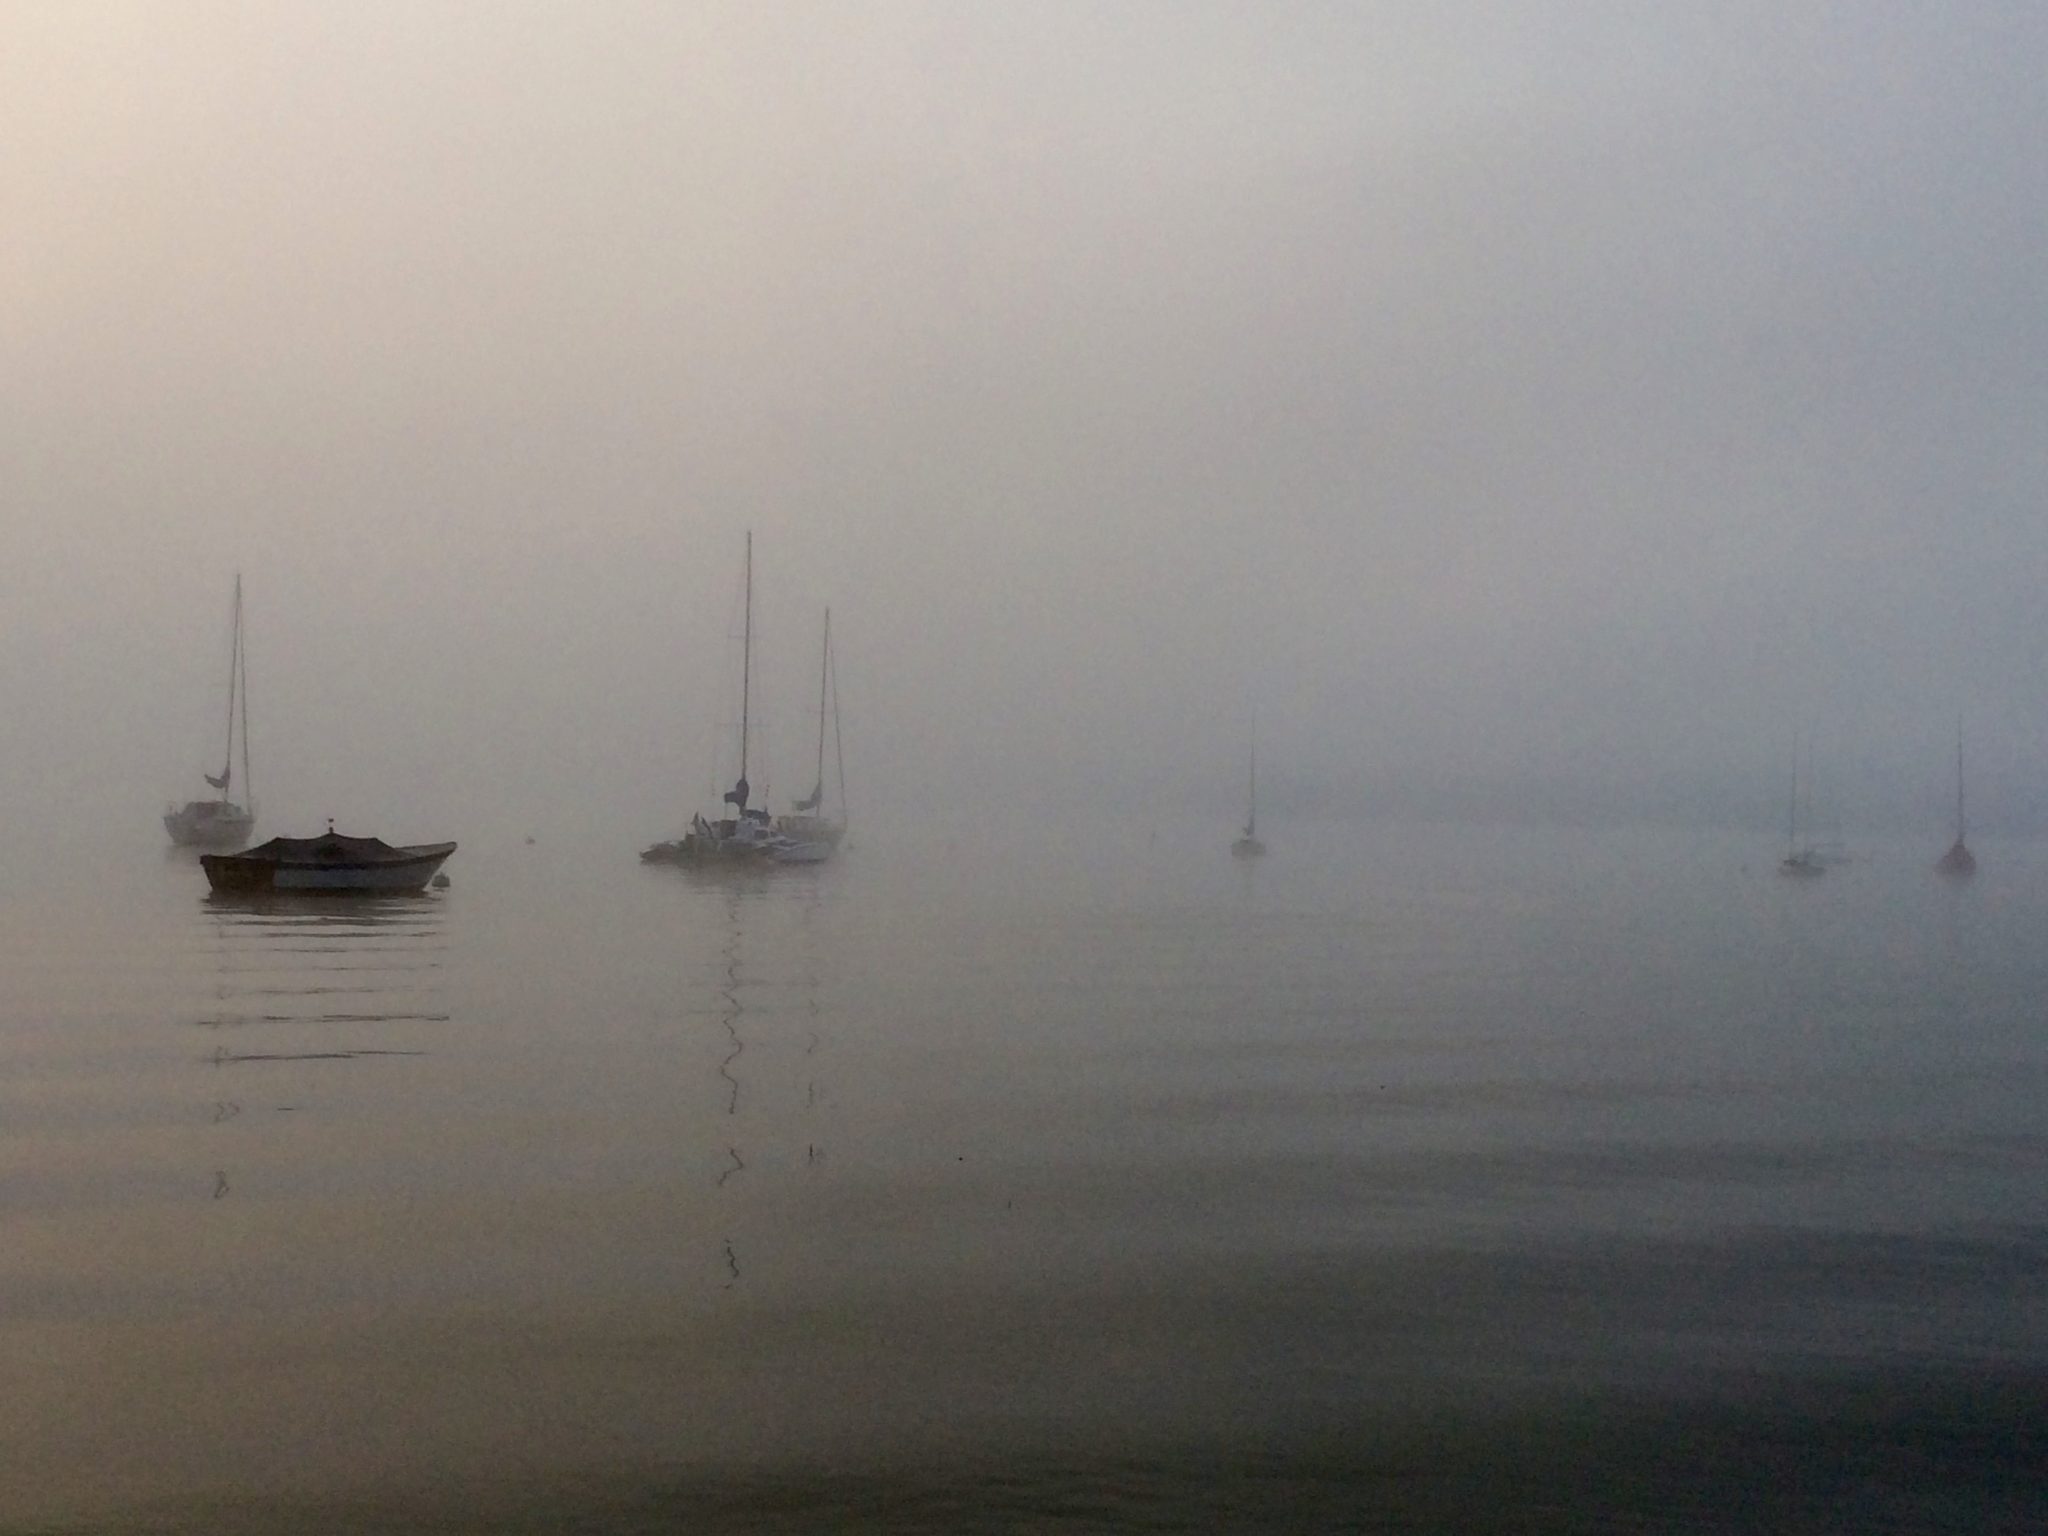 Foggy morning on Chautauqua lake